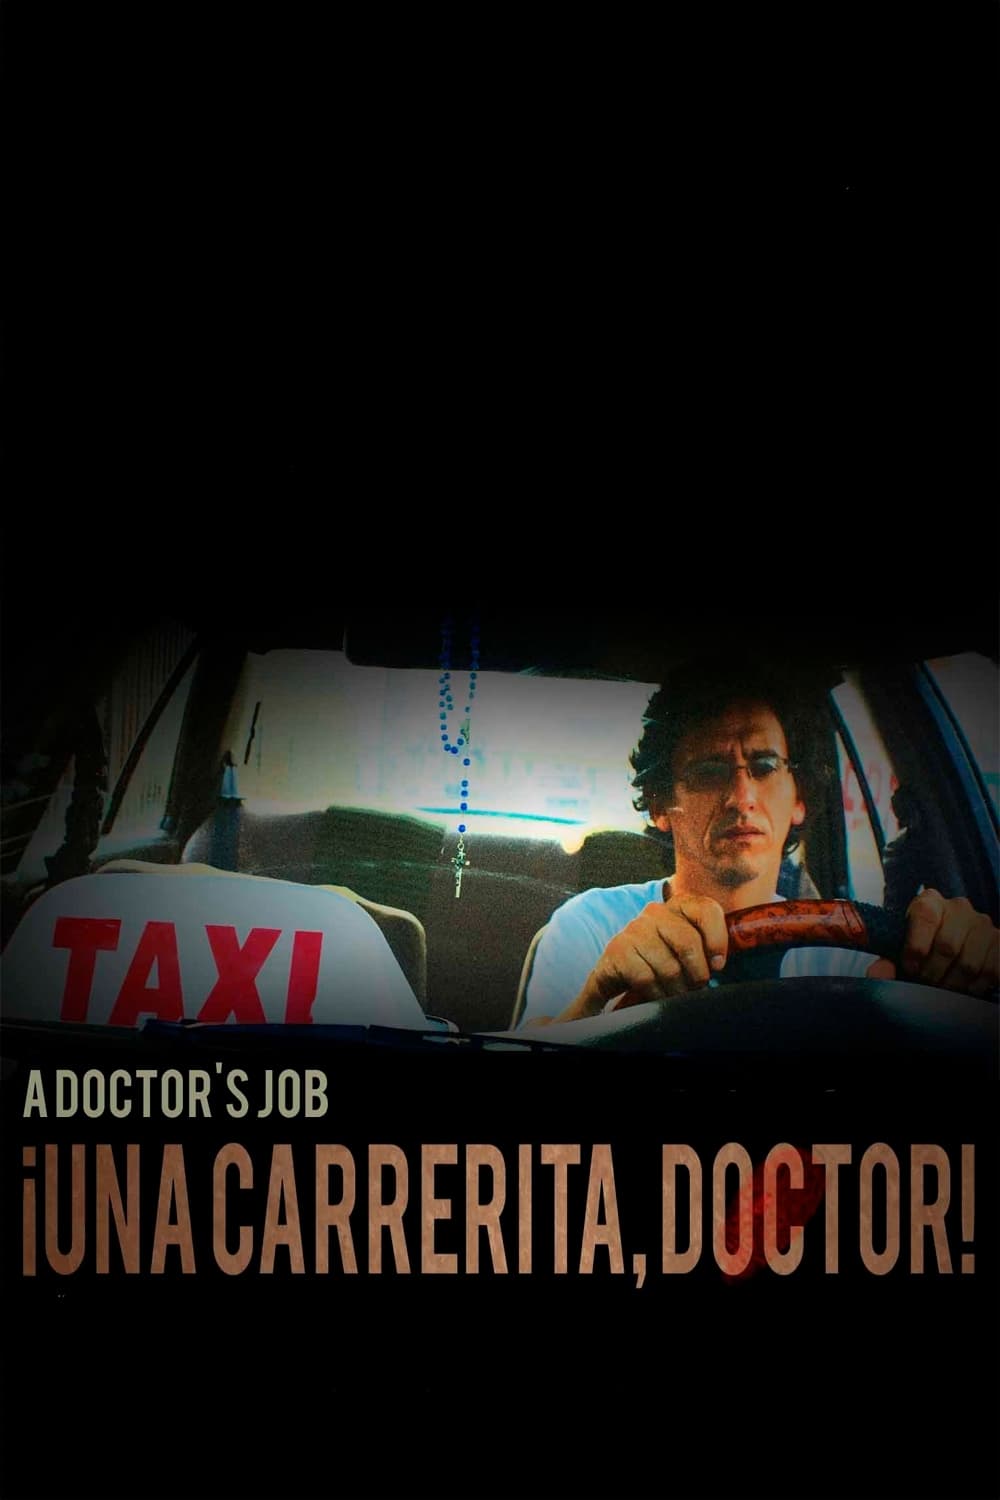 A Doctor's Job